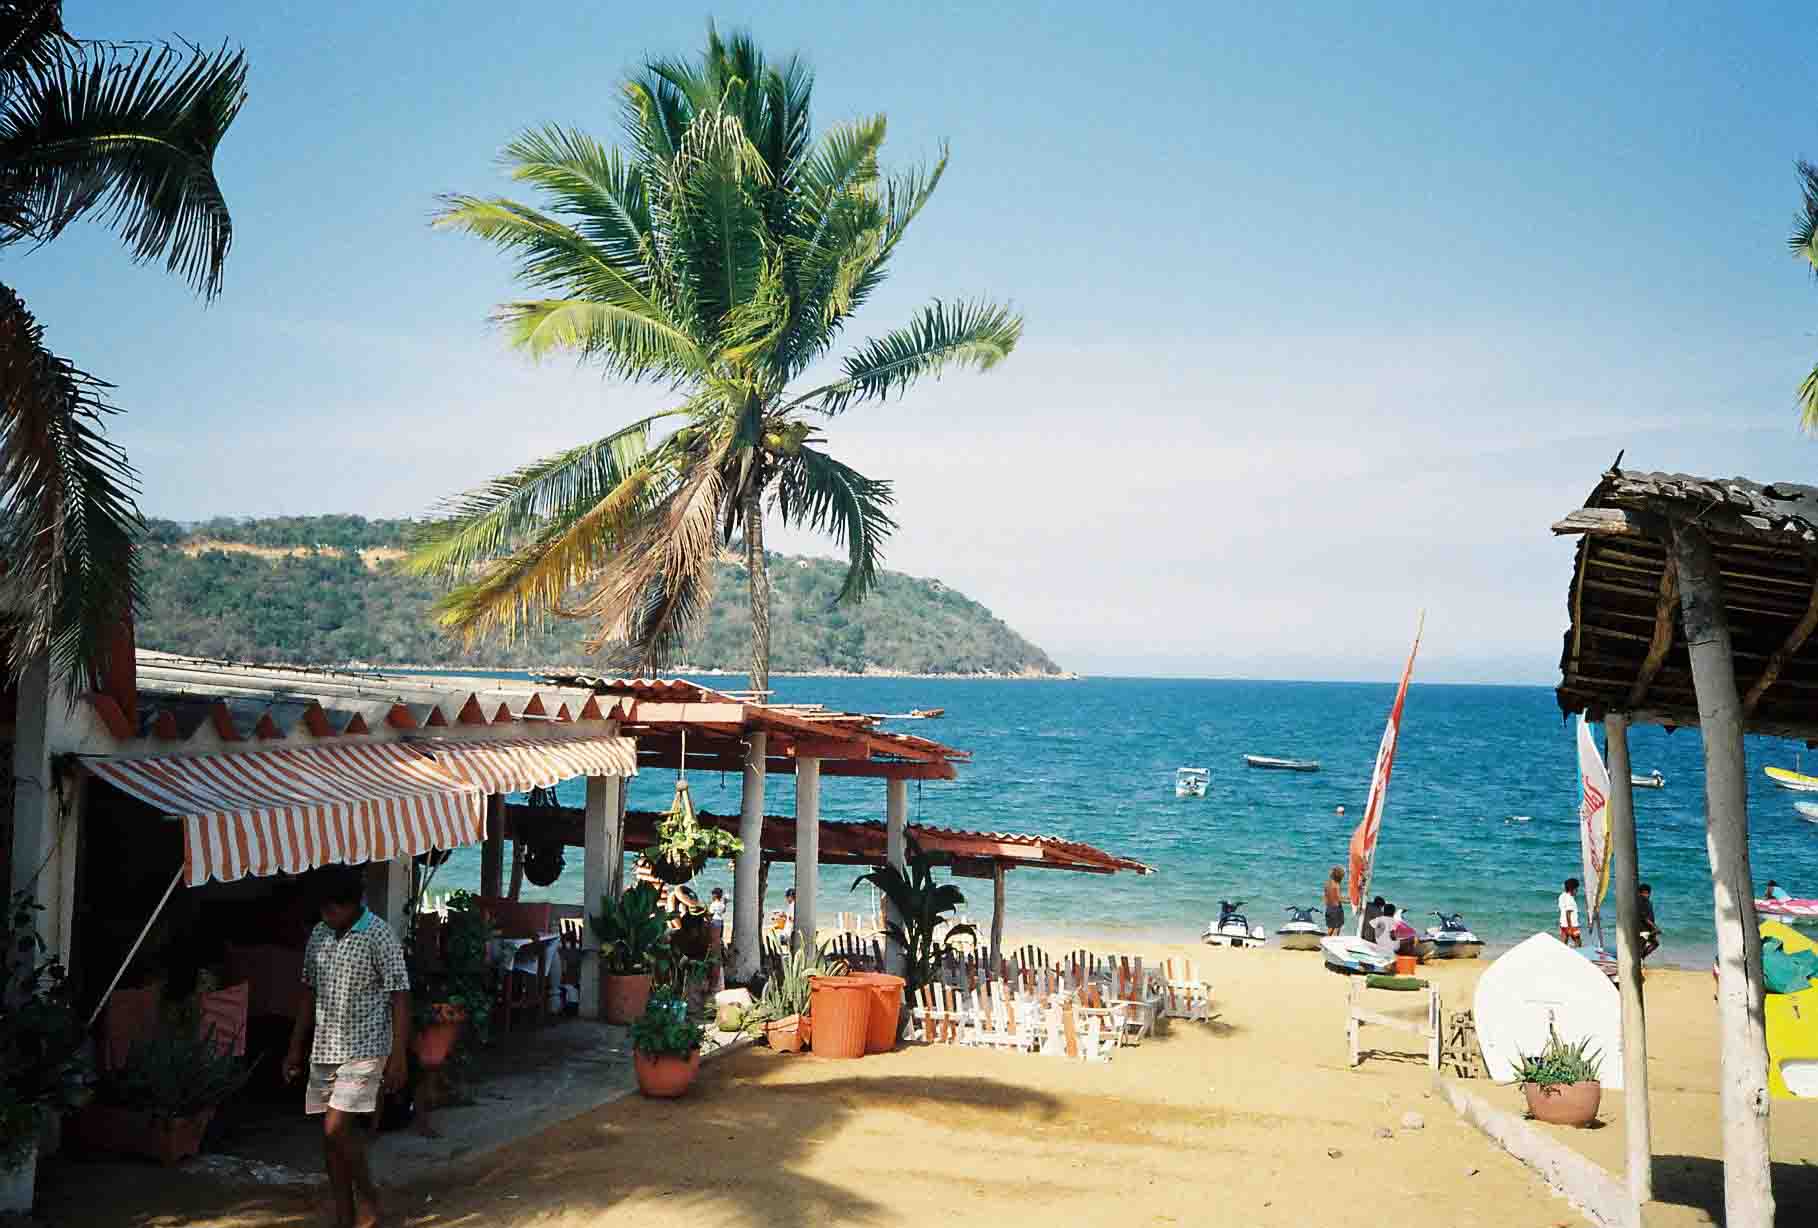 Acapulco, 1992 Photo by W. Stock